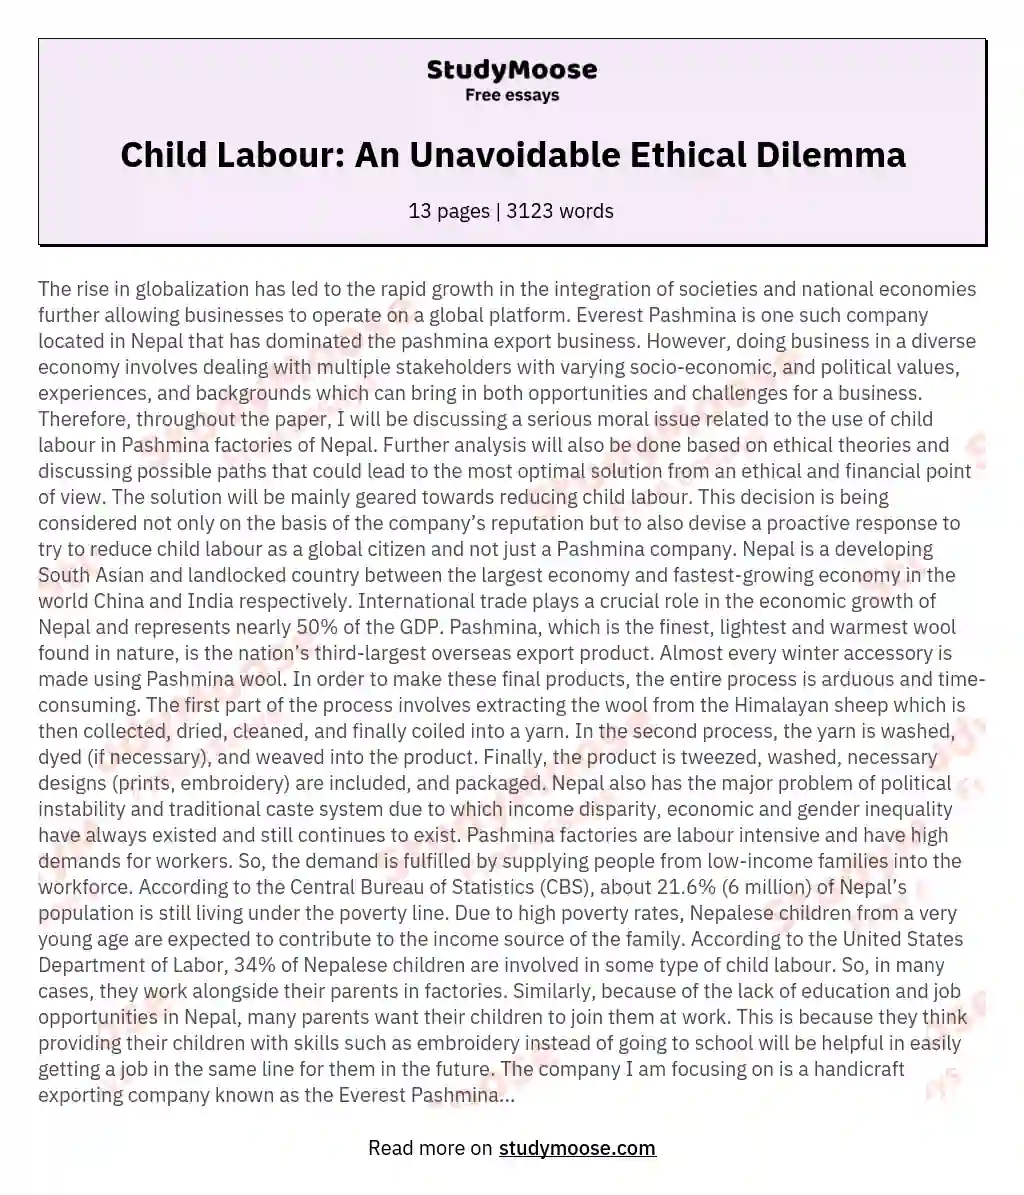 Child Labour: An Unavoidable Ethical Dilemma essay